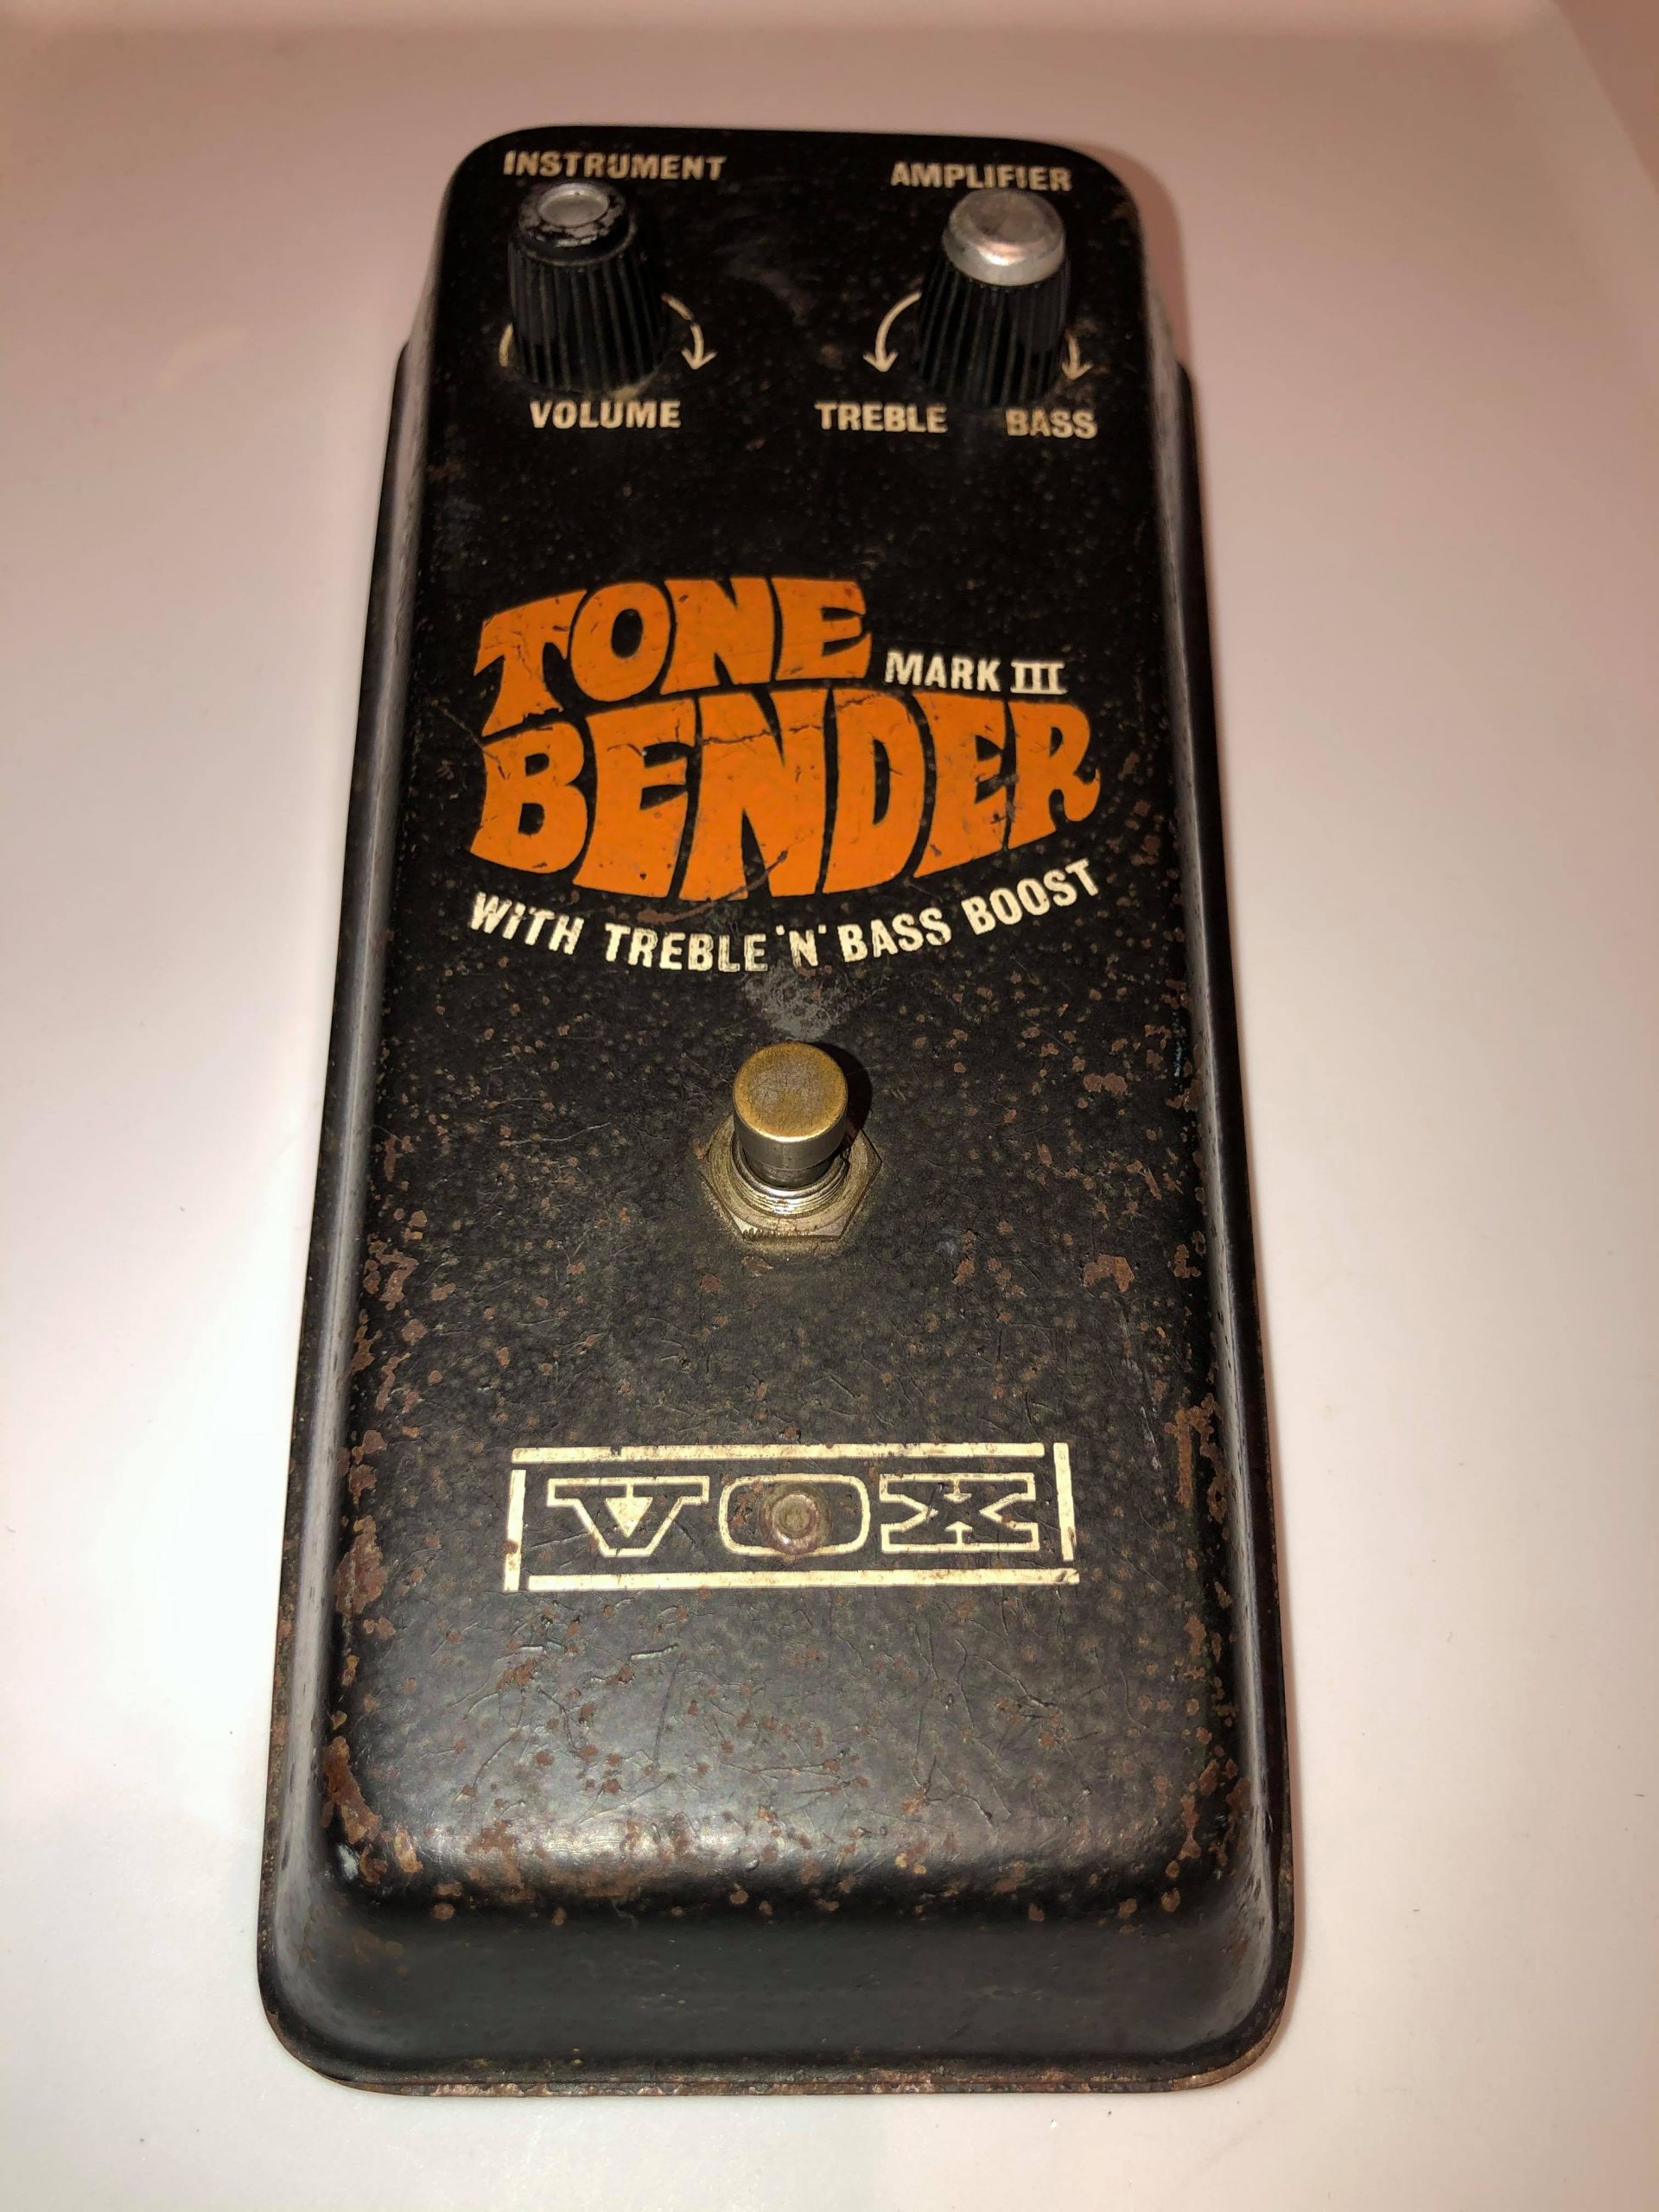 Vox Tone Bender MKIII, with treble & bass boost (Photo credit: J. Bagwell)